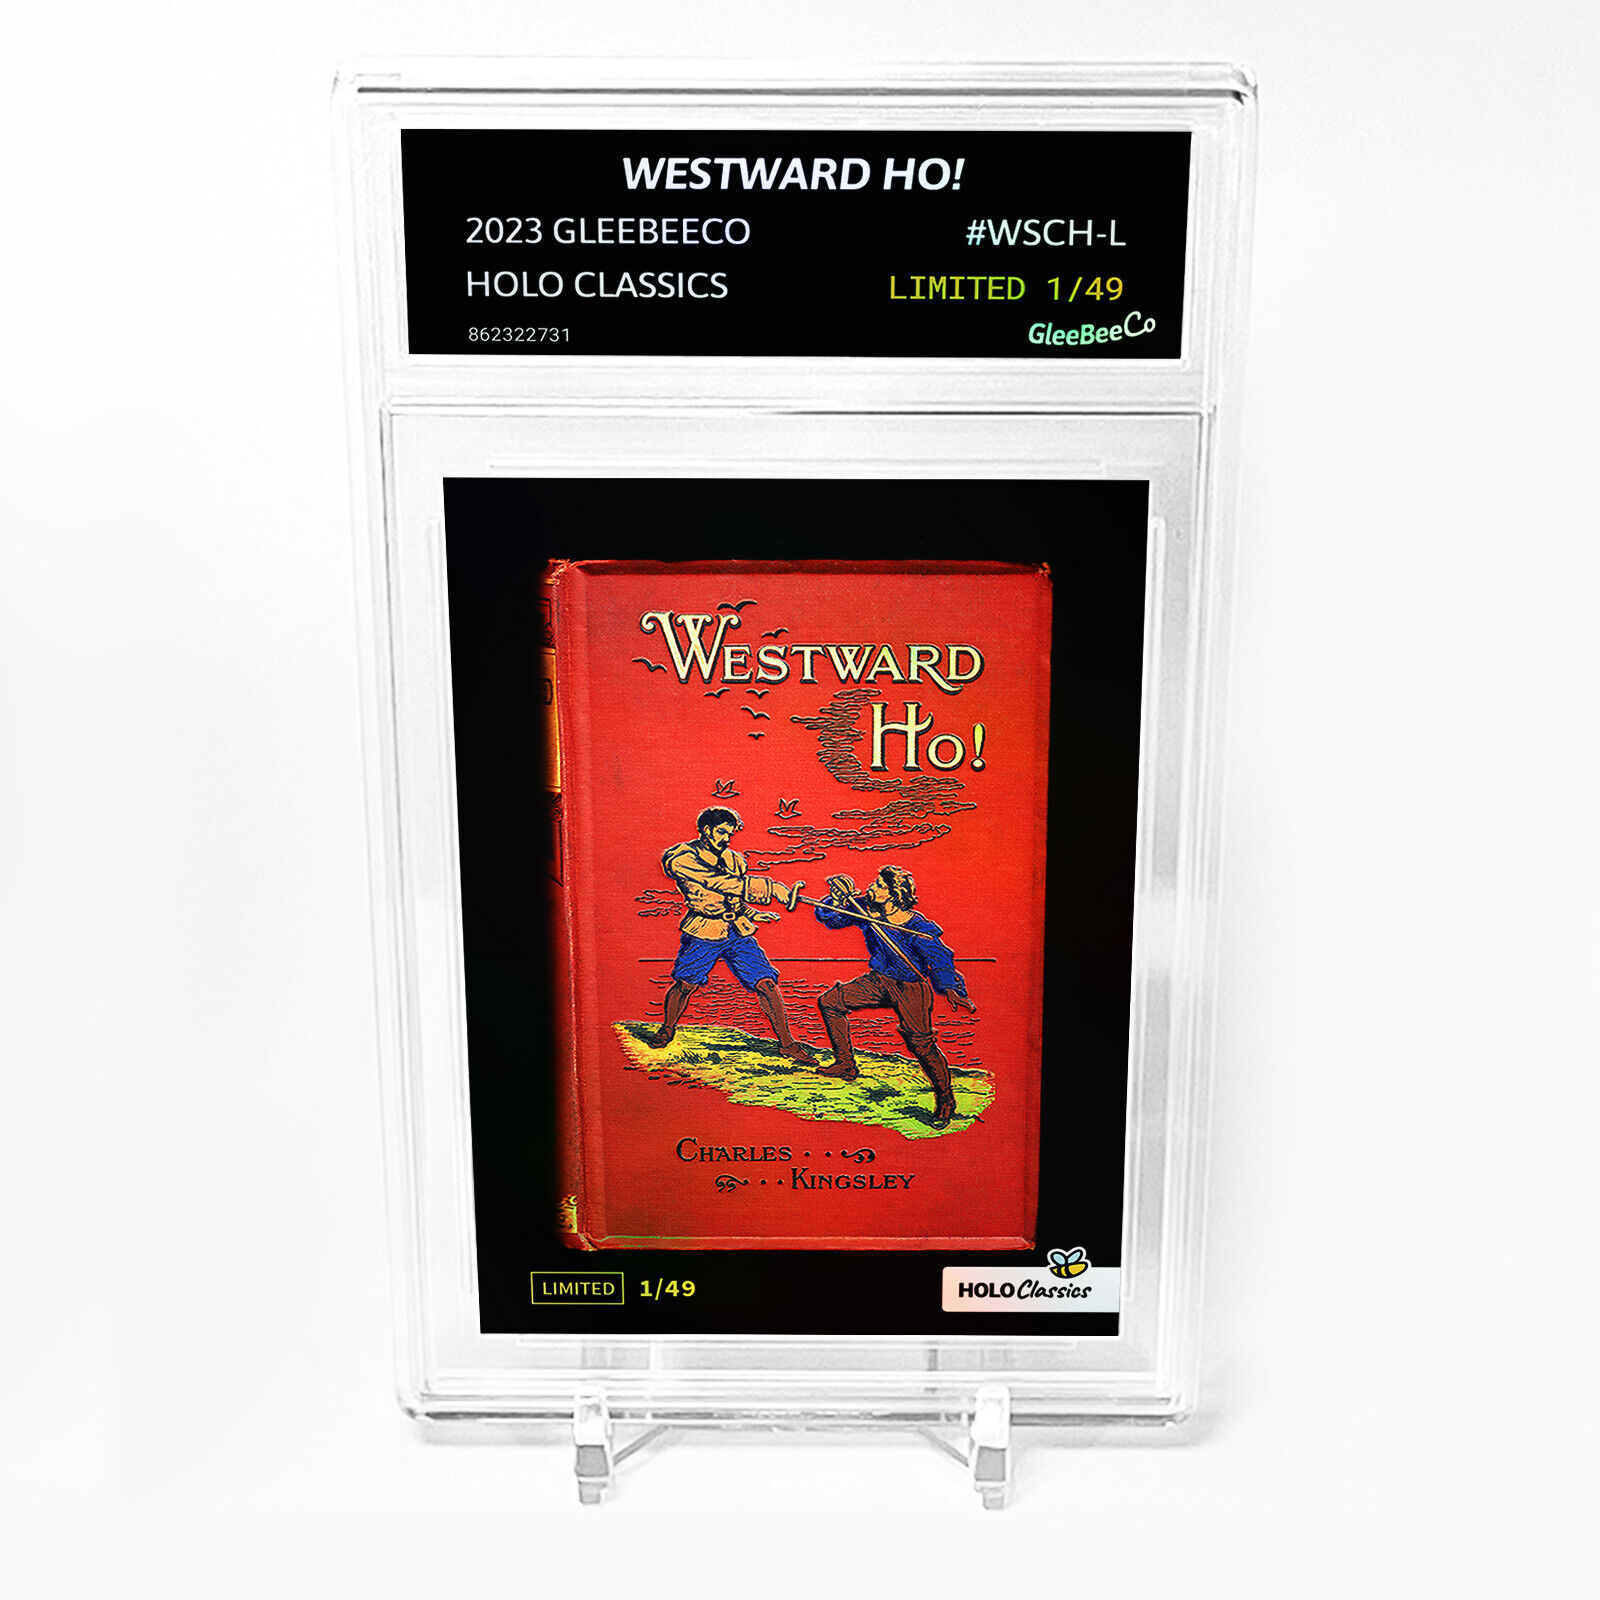 WESTWARD HO Book Cover Card 2023 GleeBeeCo Charles Kingley #WSCH-L /49